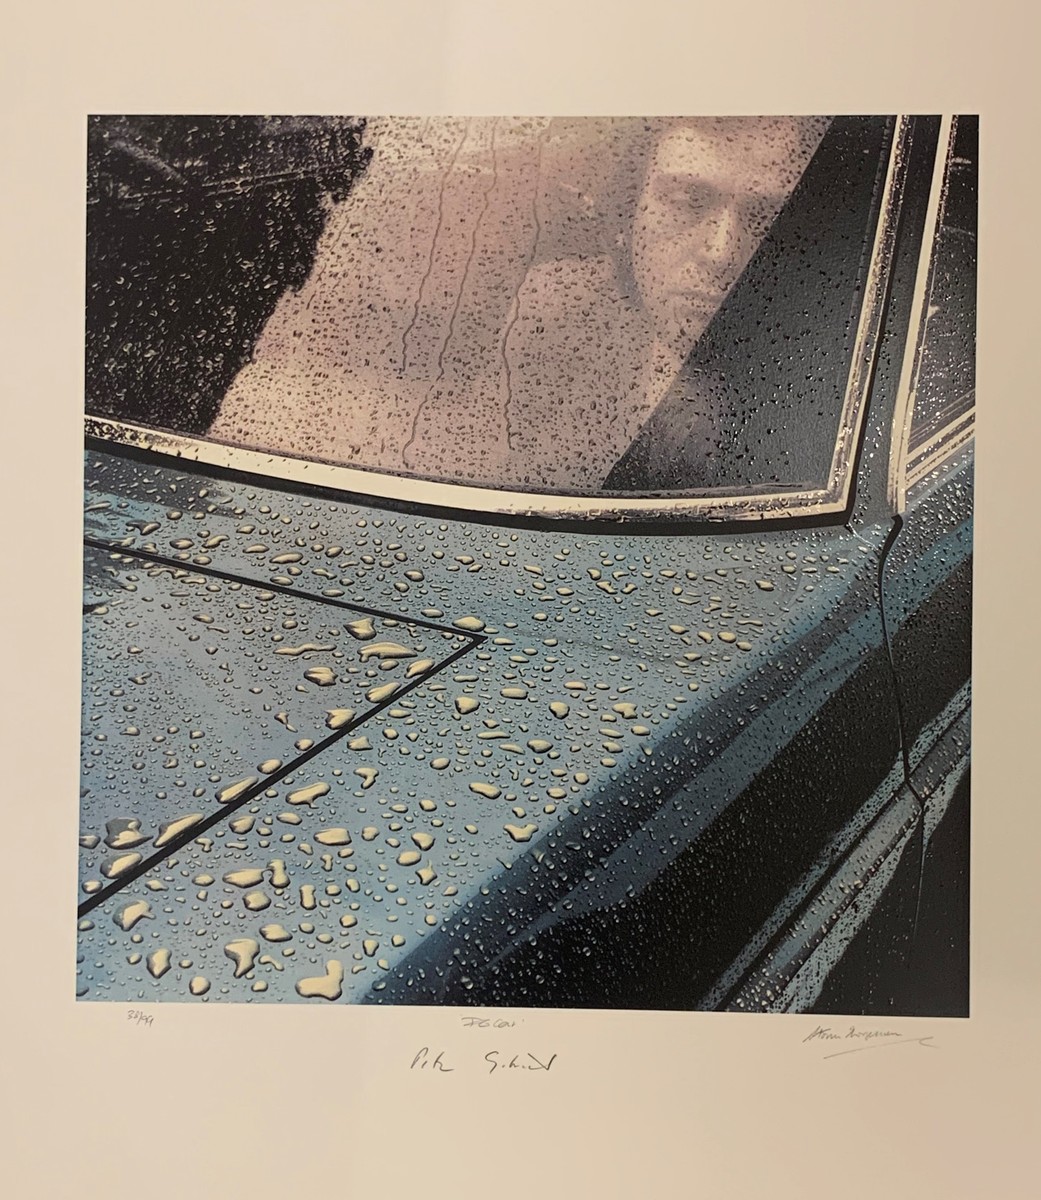 Peter Gabriel “Car” Limited Fine Art Print – Signed by Peter Gabriel